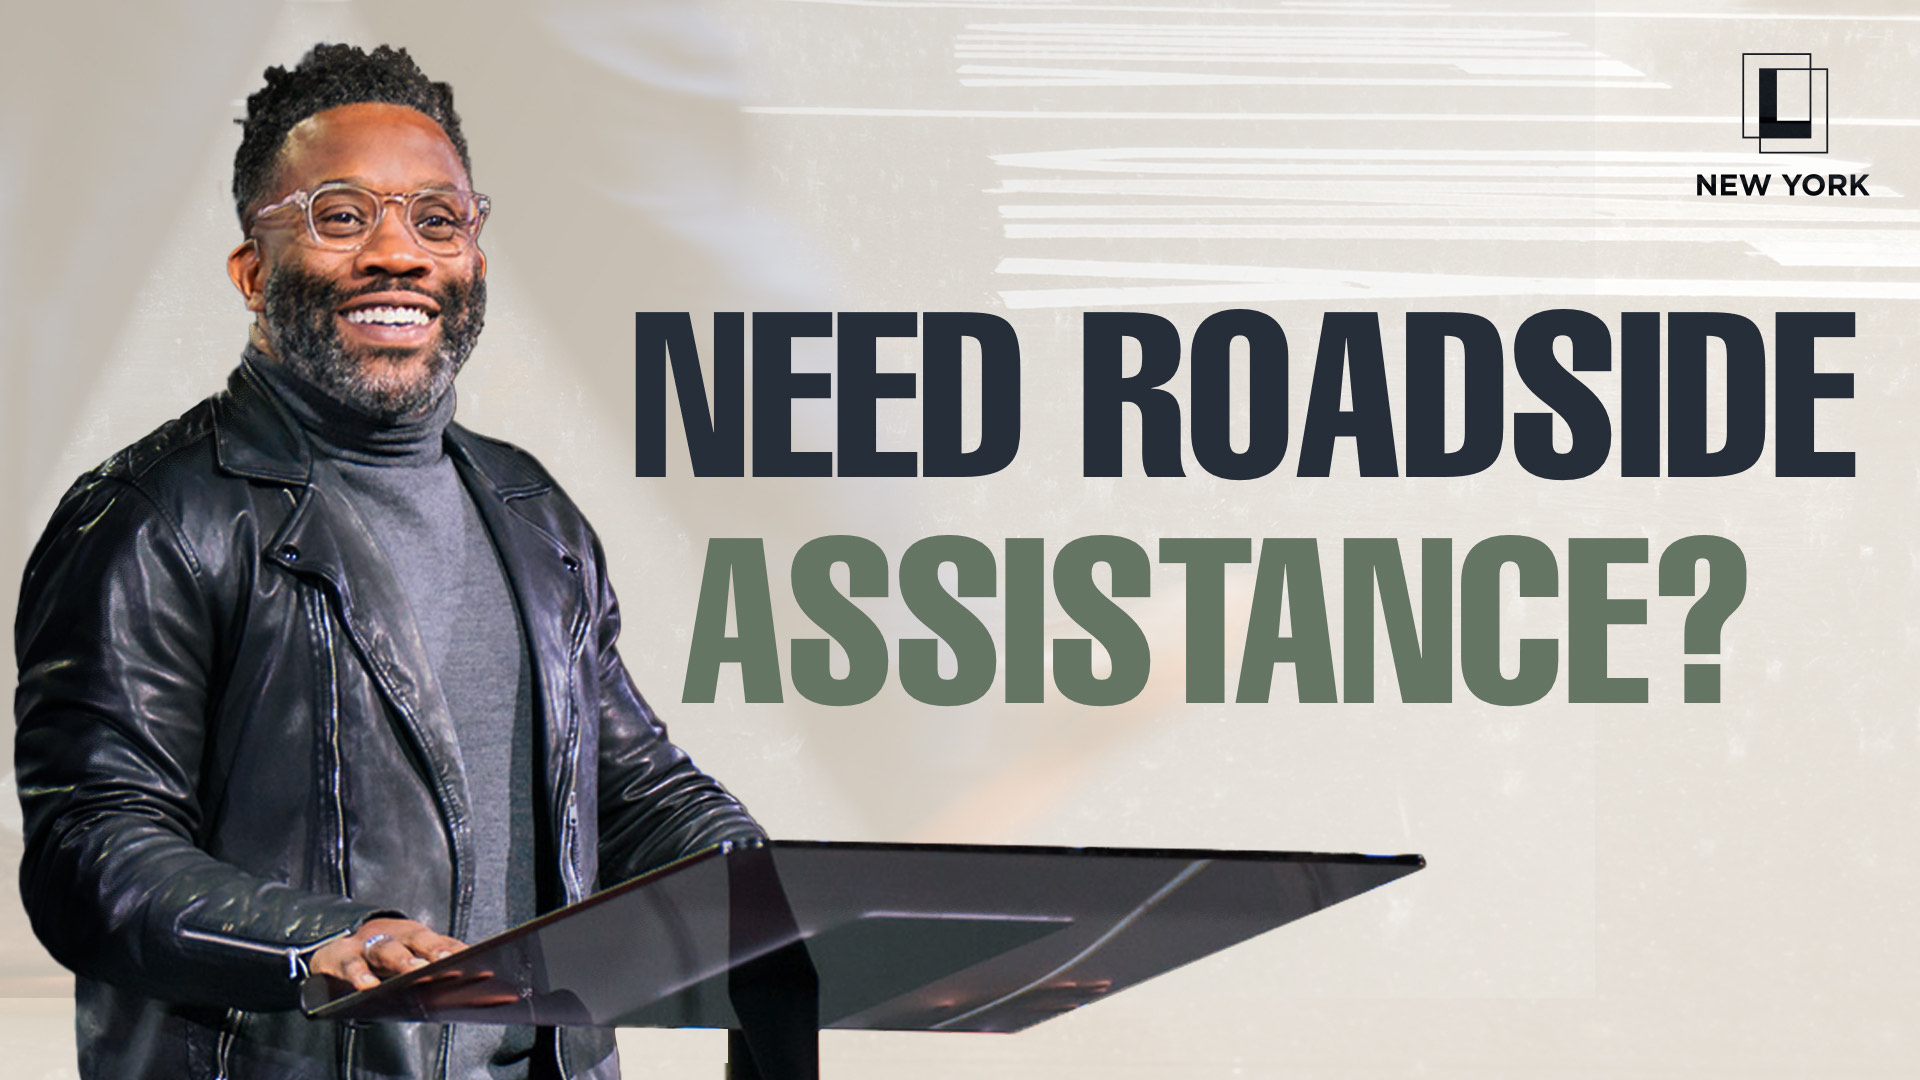 Need Roadside Assistance? Image